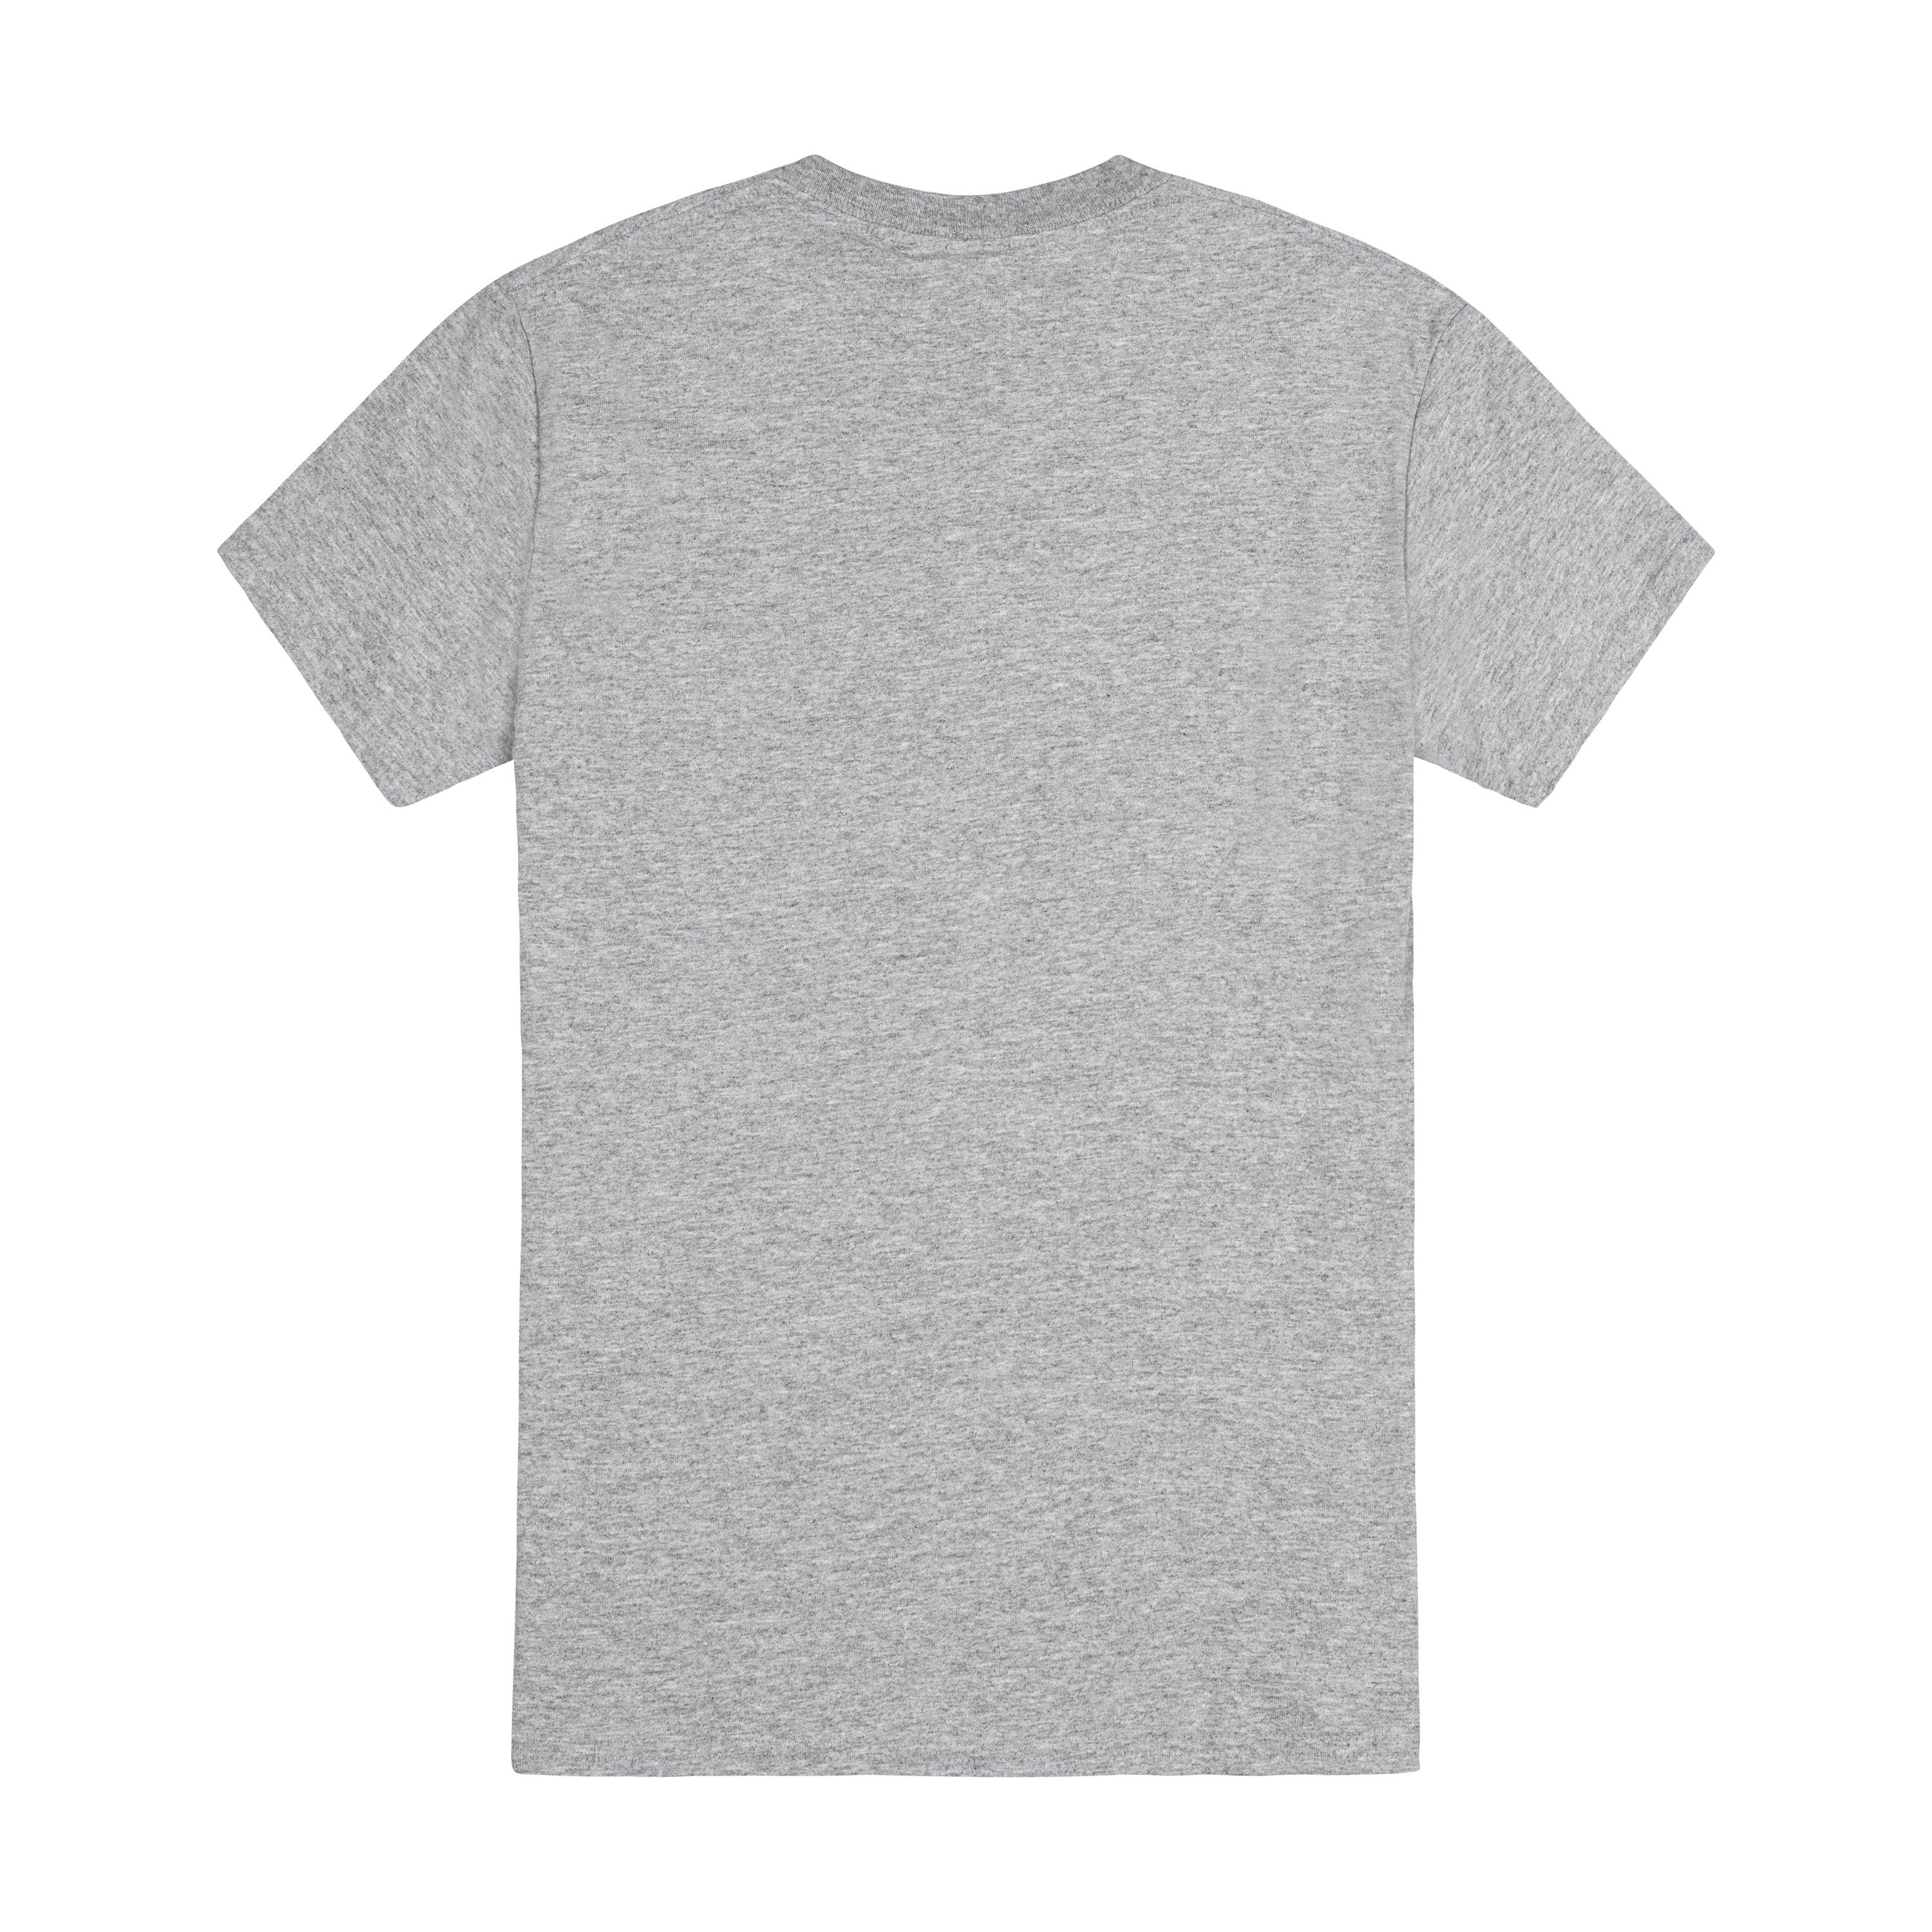 MIT T-Shirt – The Harvard Shop